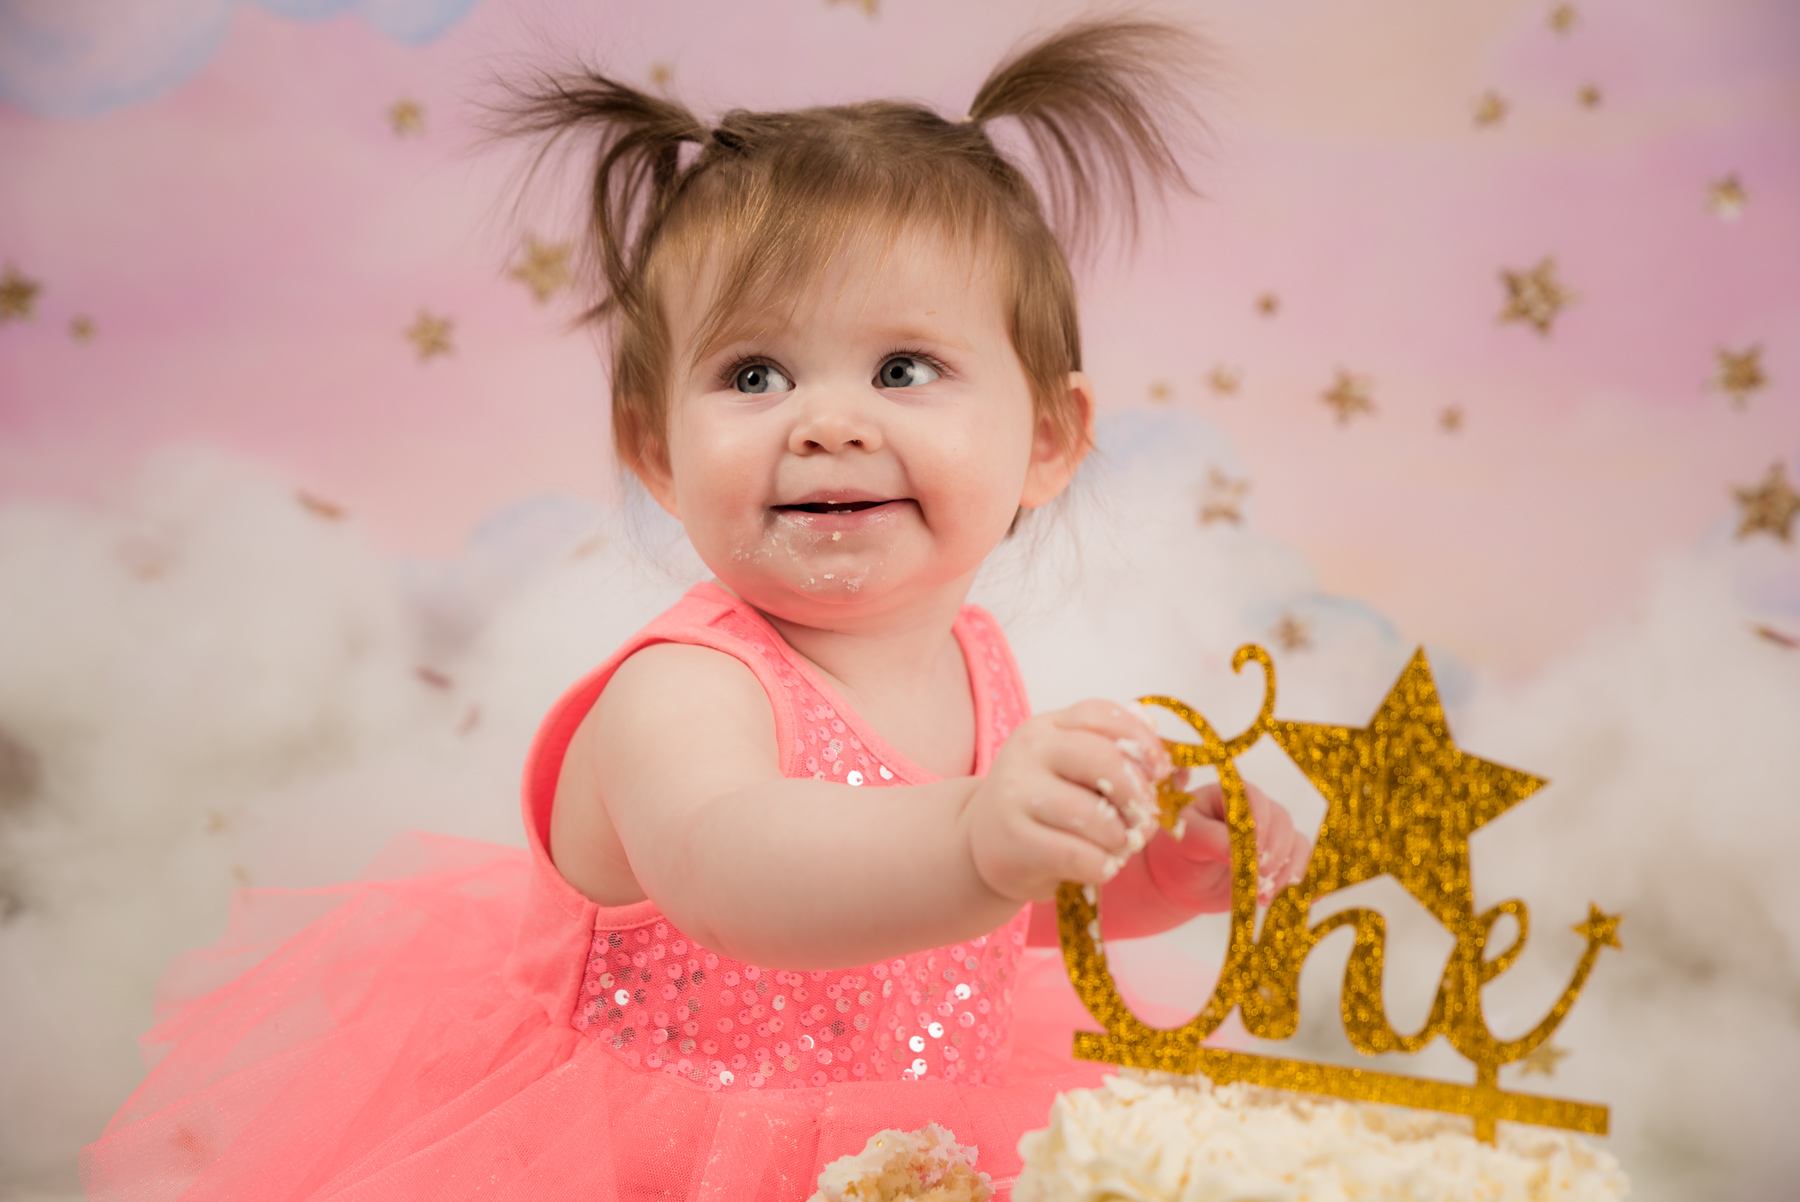 Baby Cake Smash 1 1 - Cake Smash - 1st Birthday